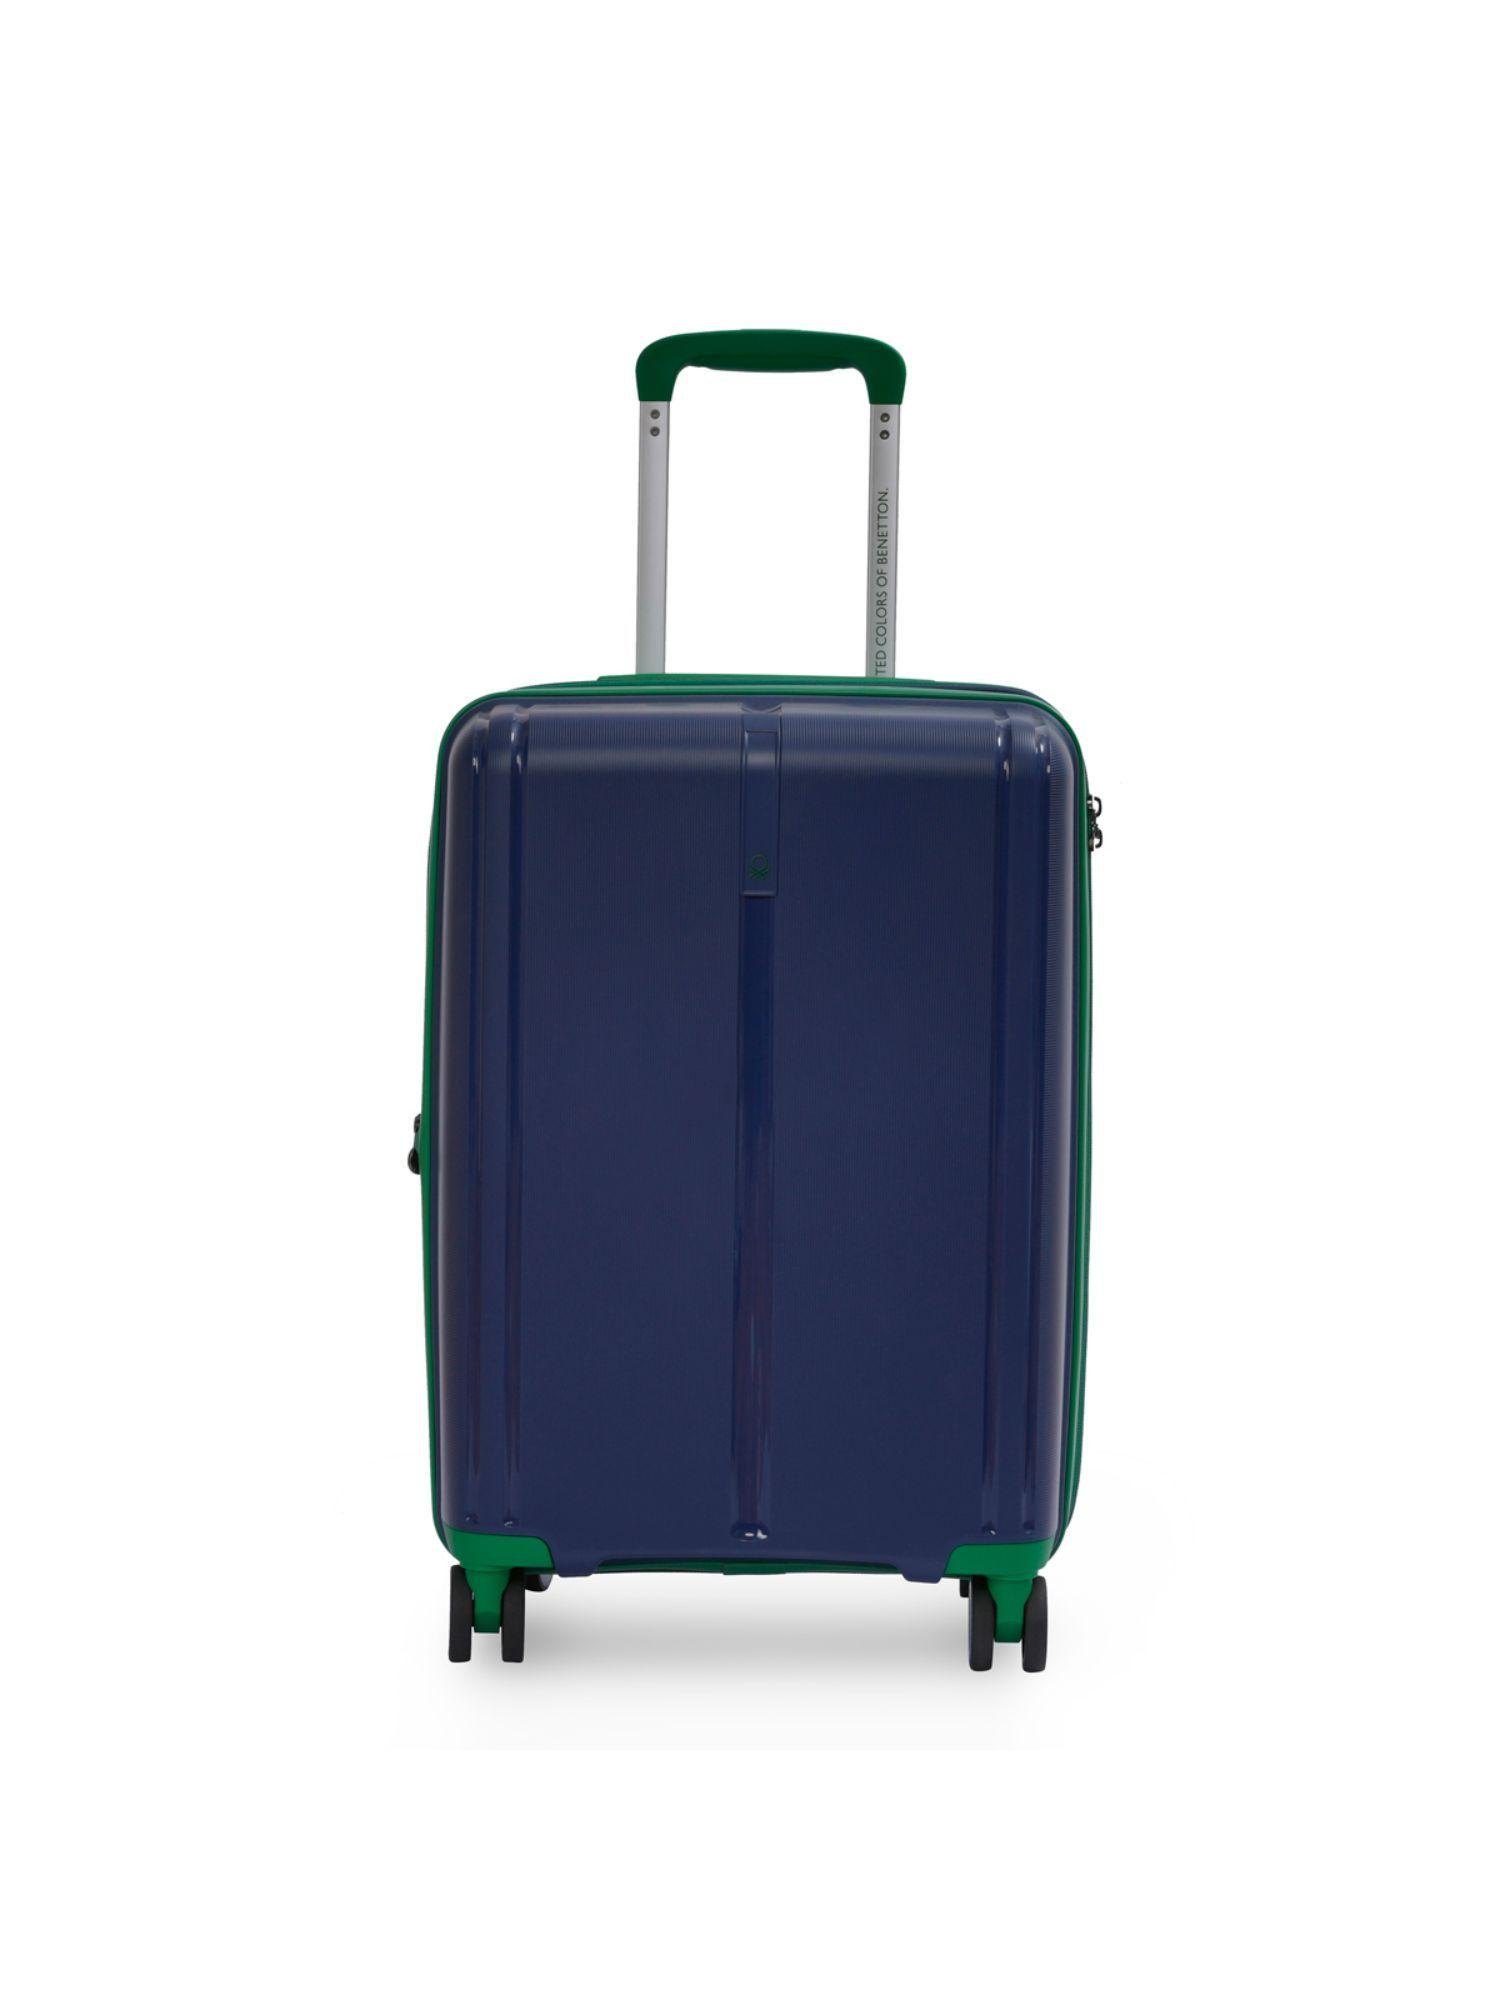 unisex hard luggage navy blue tsa lock trolley bag